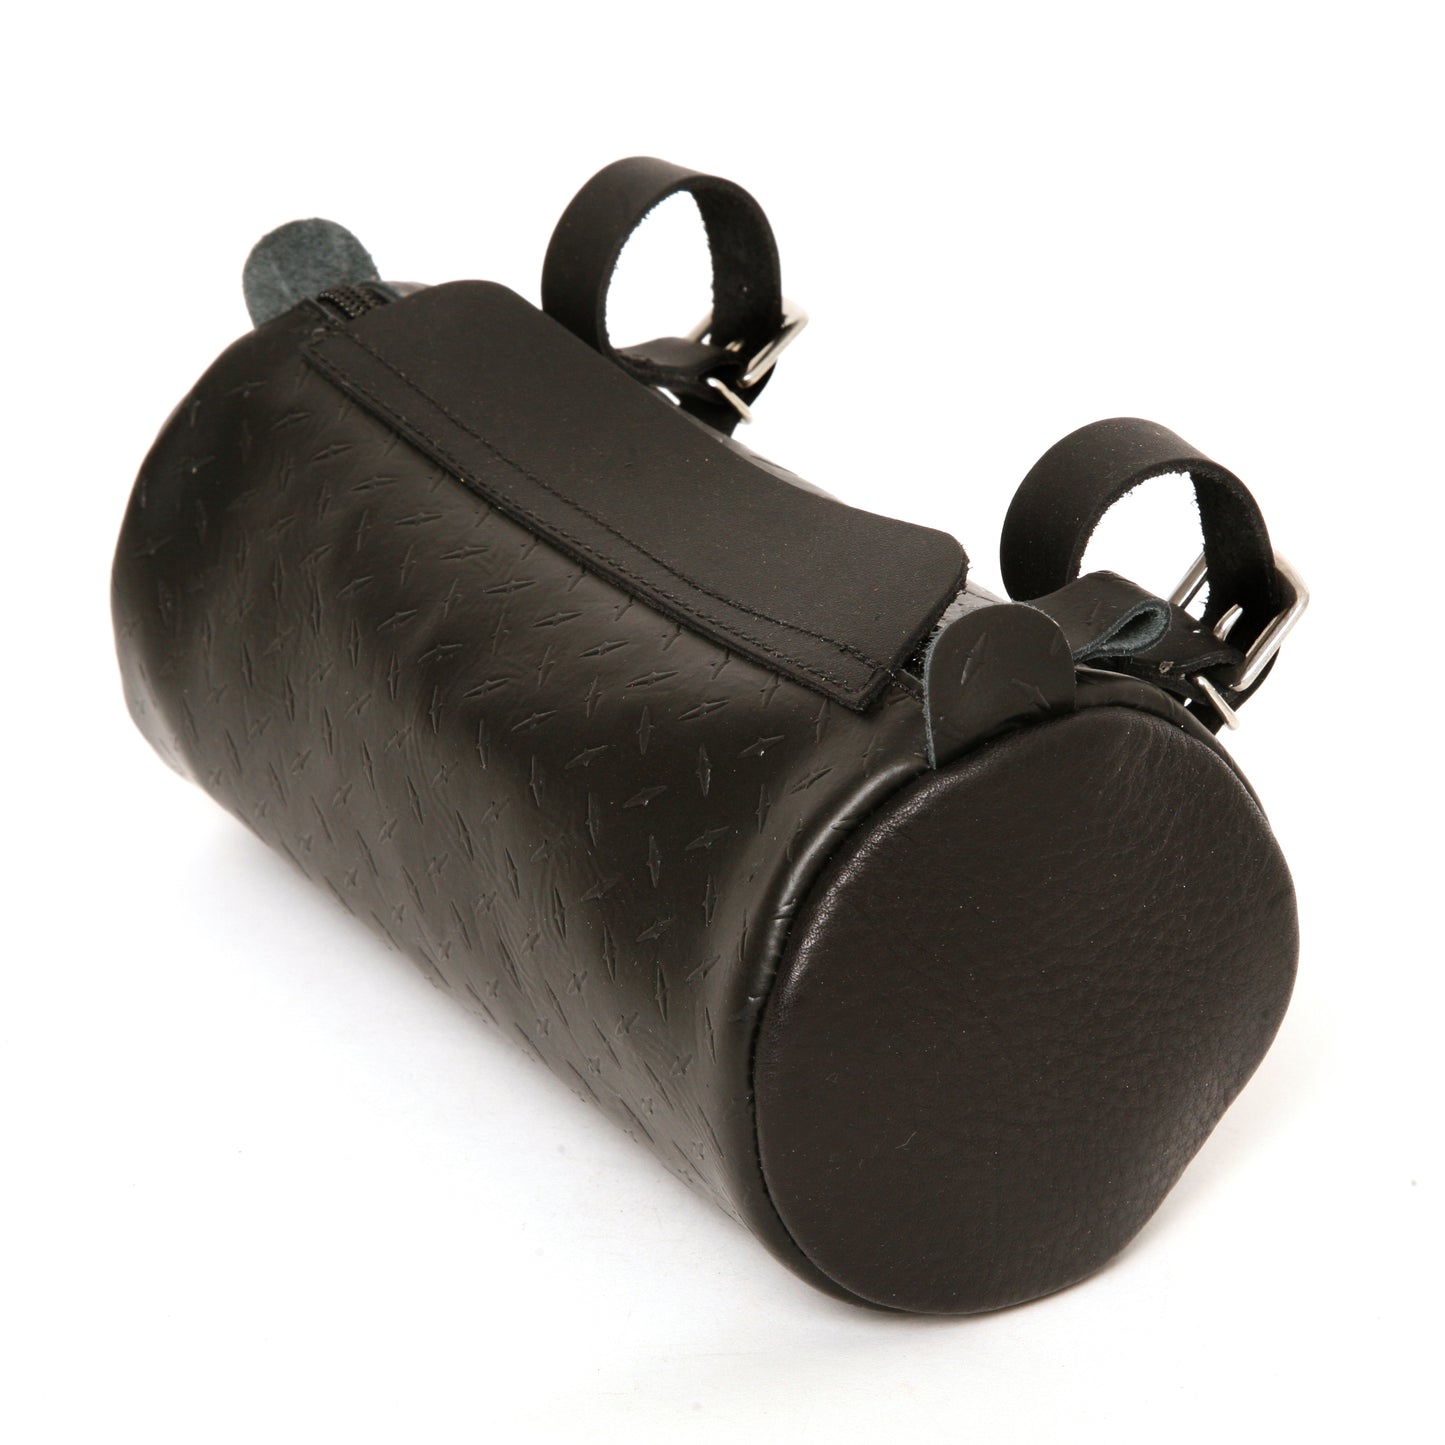 Barrel Roll cycling bag